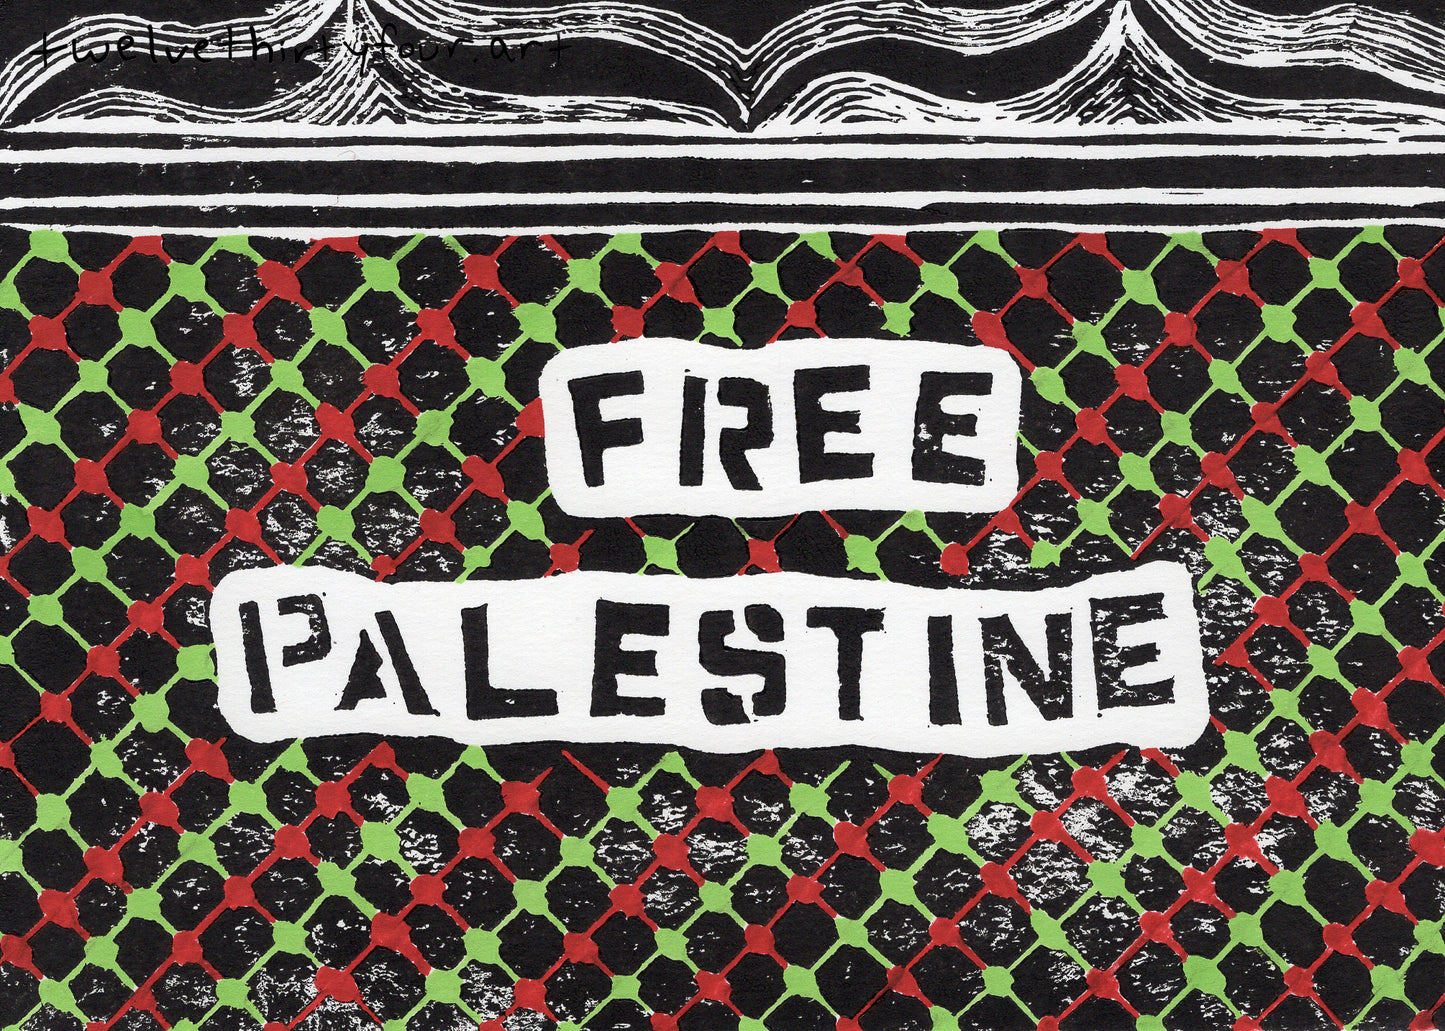 Prints for Palestine